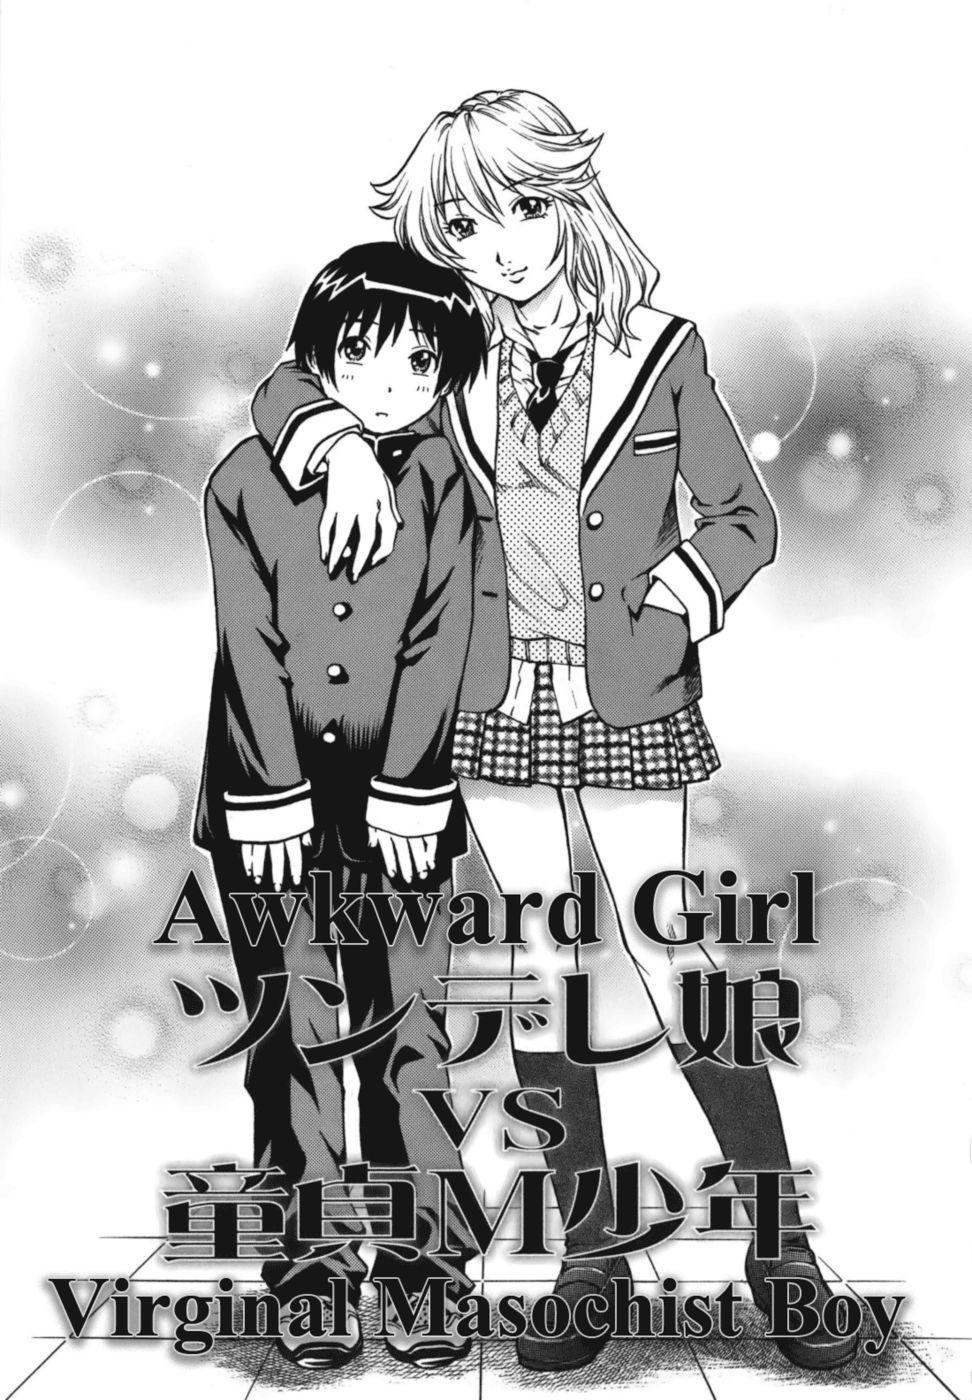 Hentai Manga Comic-Awkward Girl vs Virginal Masochist Boy-Read-1